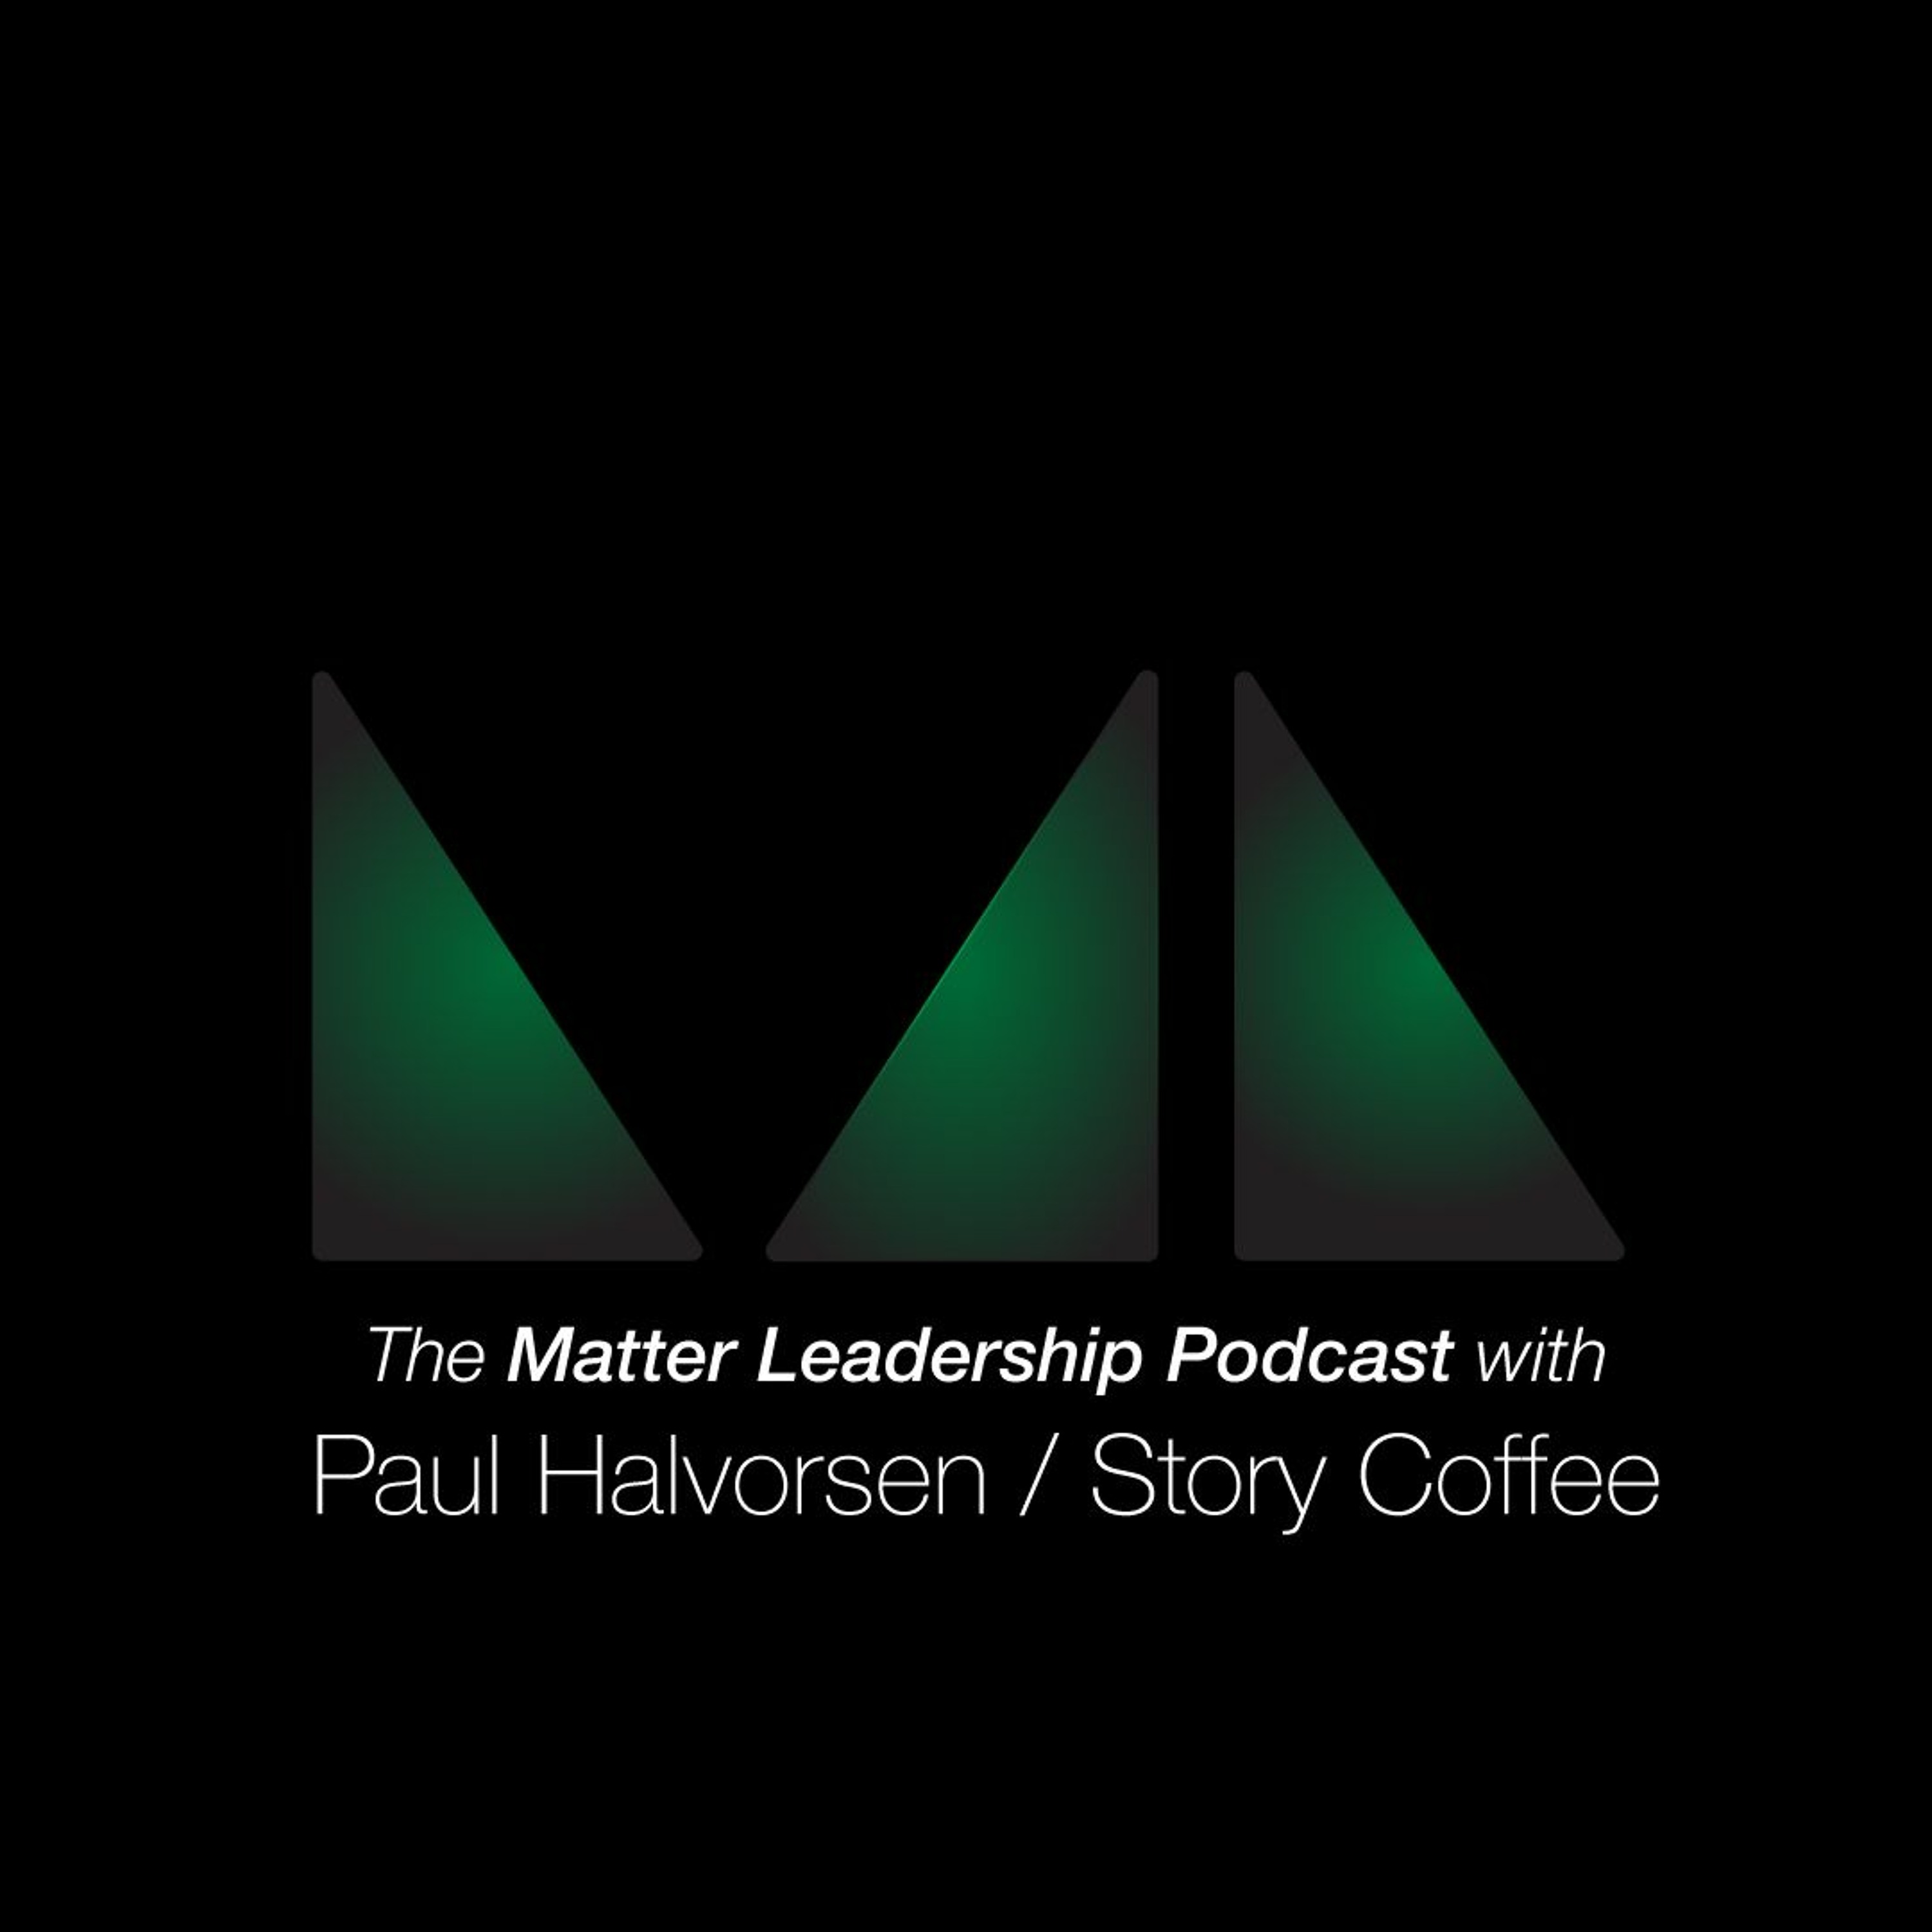 The Matter Leadership Podcast: Paul Halvorsen / Story Coffee